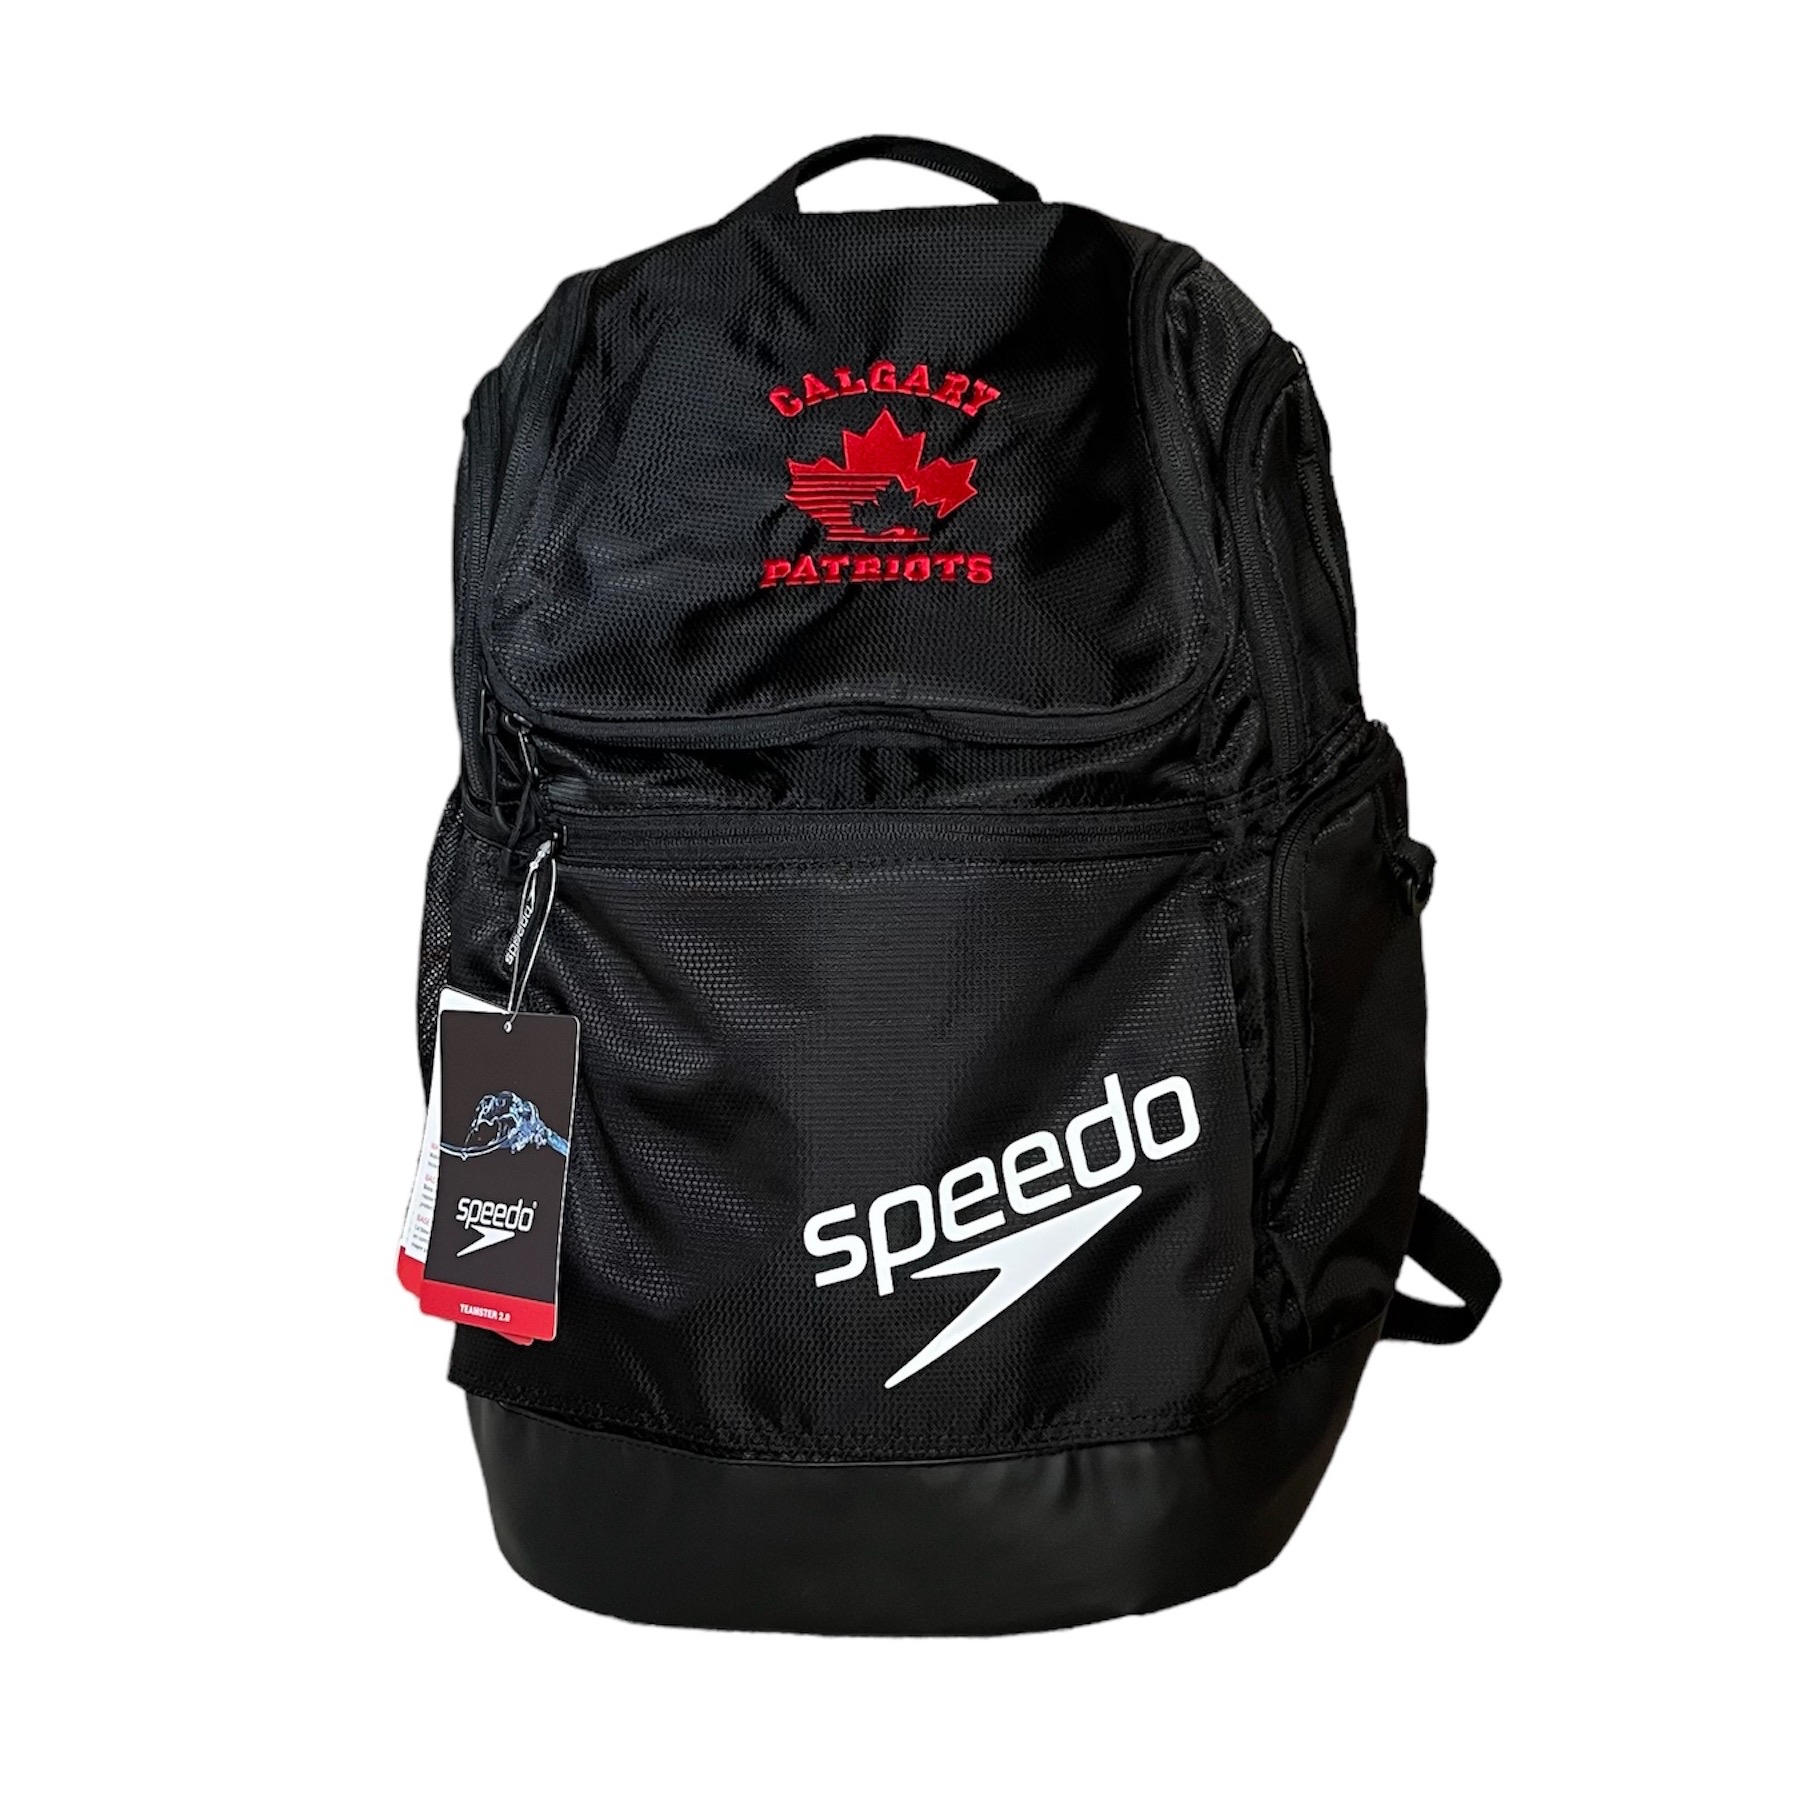 Speedo Backpack (Black with Logo)